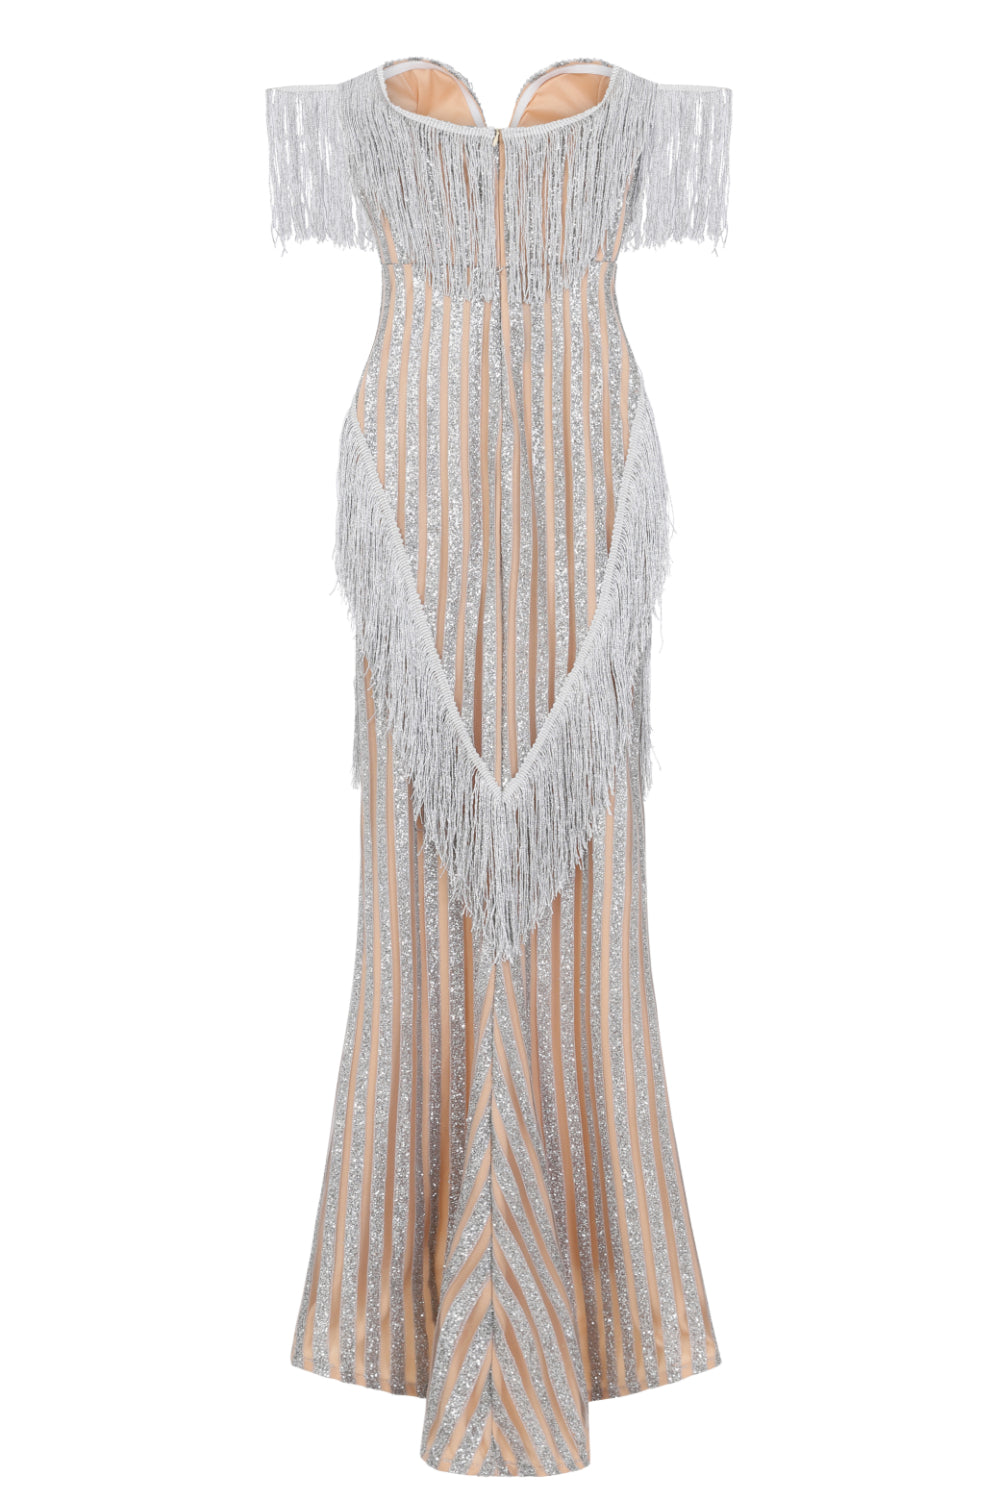 Amira Silver & Nude Glitter Stripe Tassel Fringe Bardot Fishtail Dress